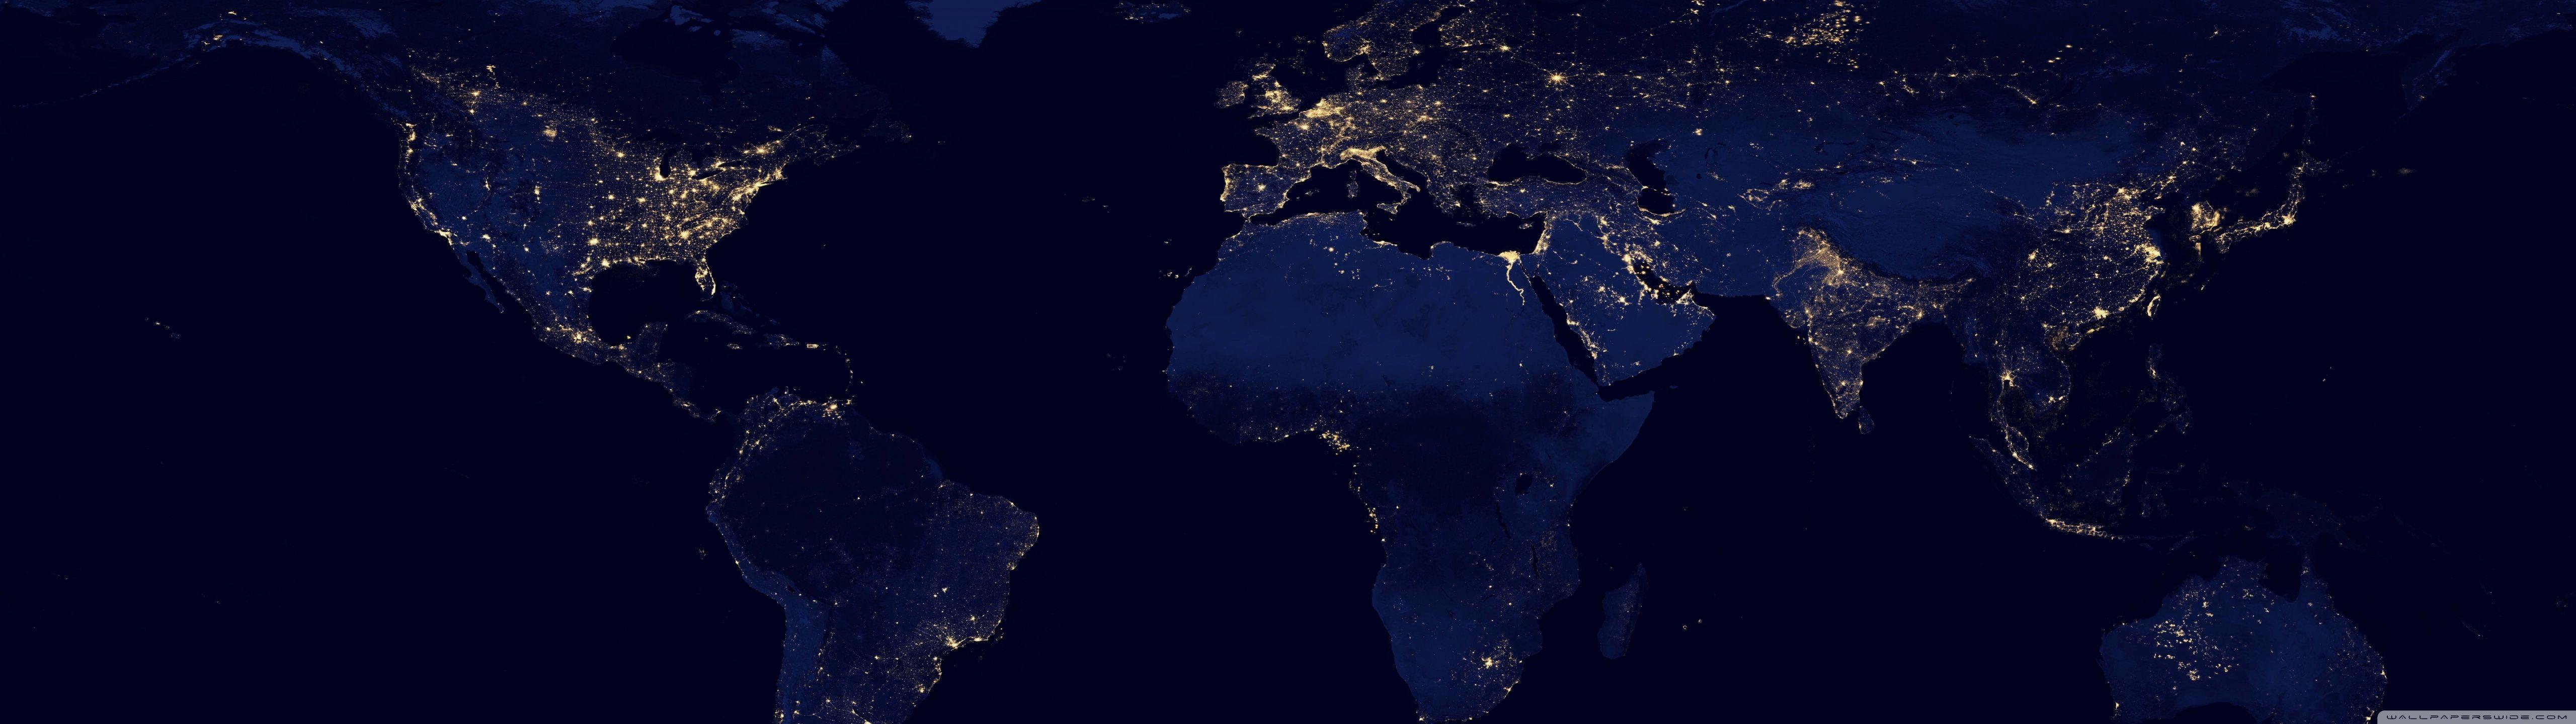 The world at night - 5120x1440